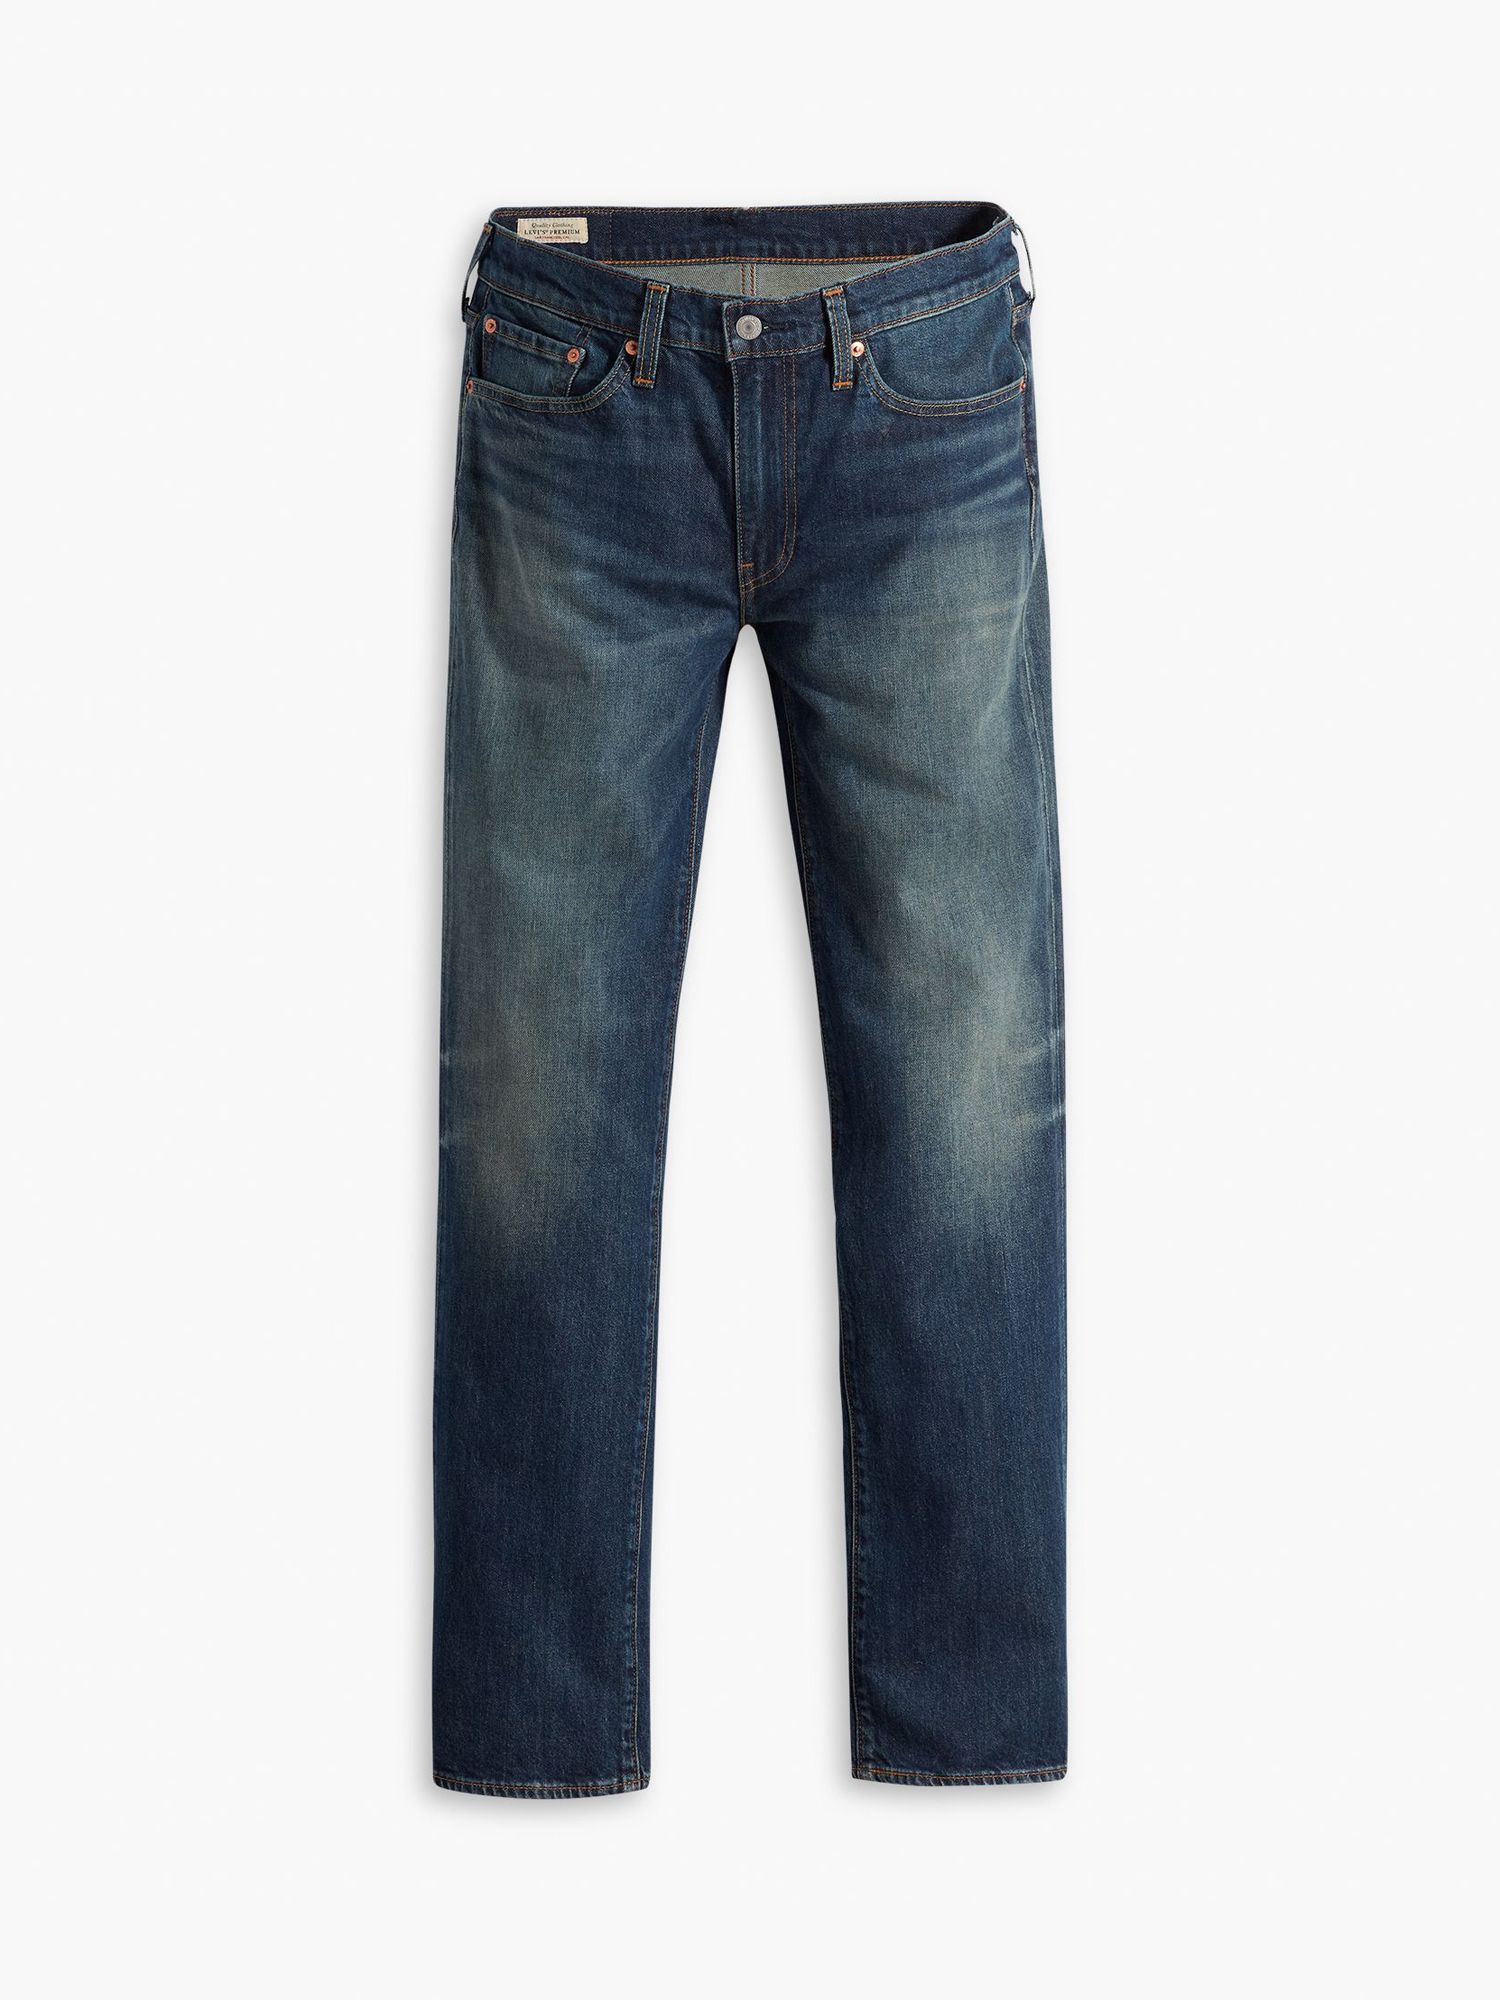 Levi's 514 Straight Cut Jeans, Denim, 30S